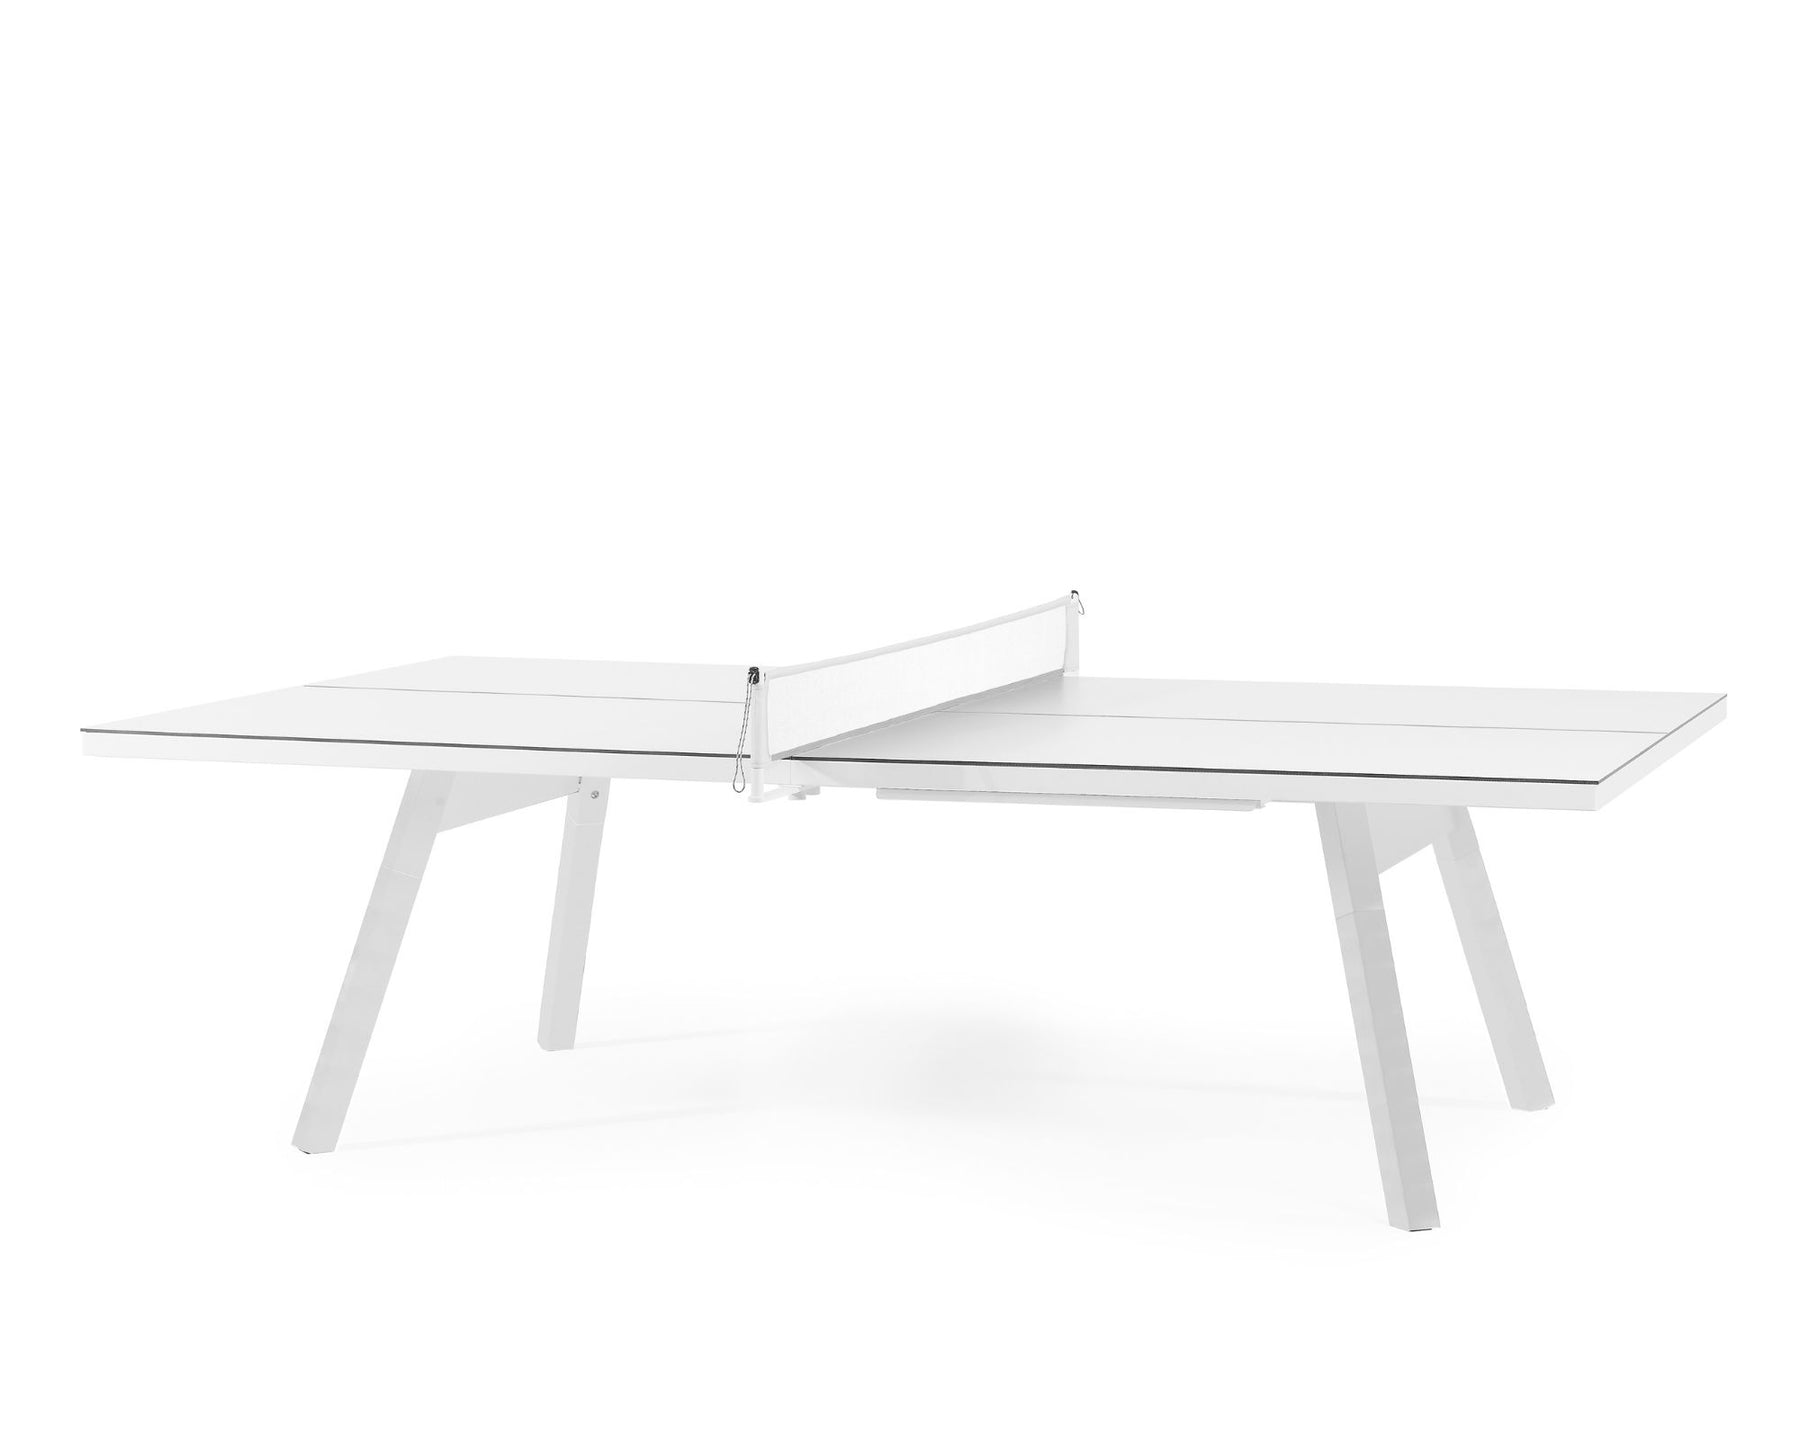 You & Me Ping Pong Table Monochrome White | DSHOP